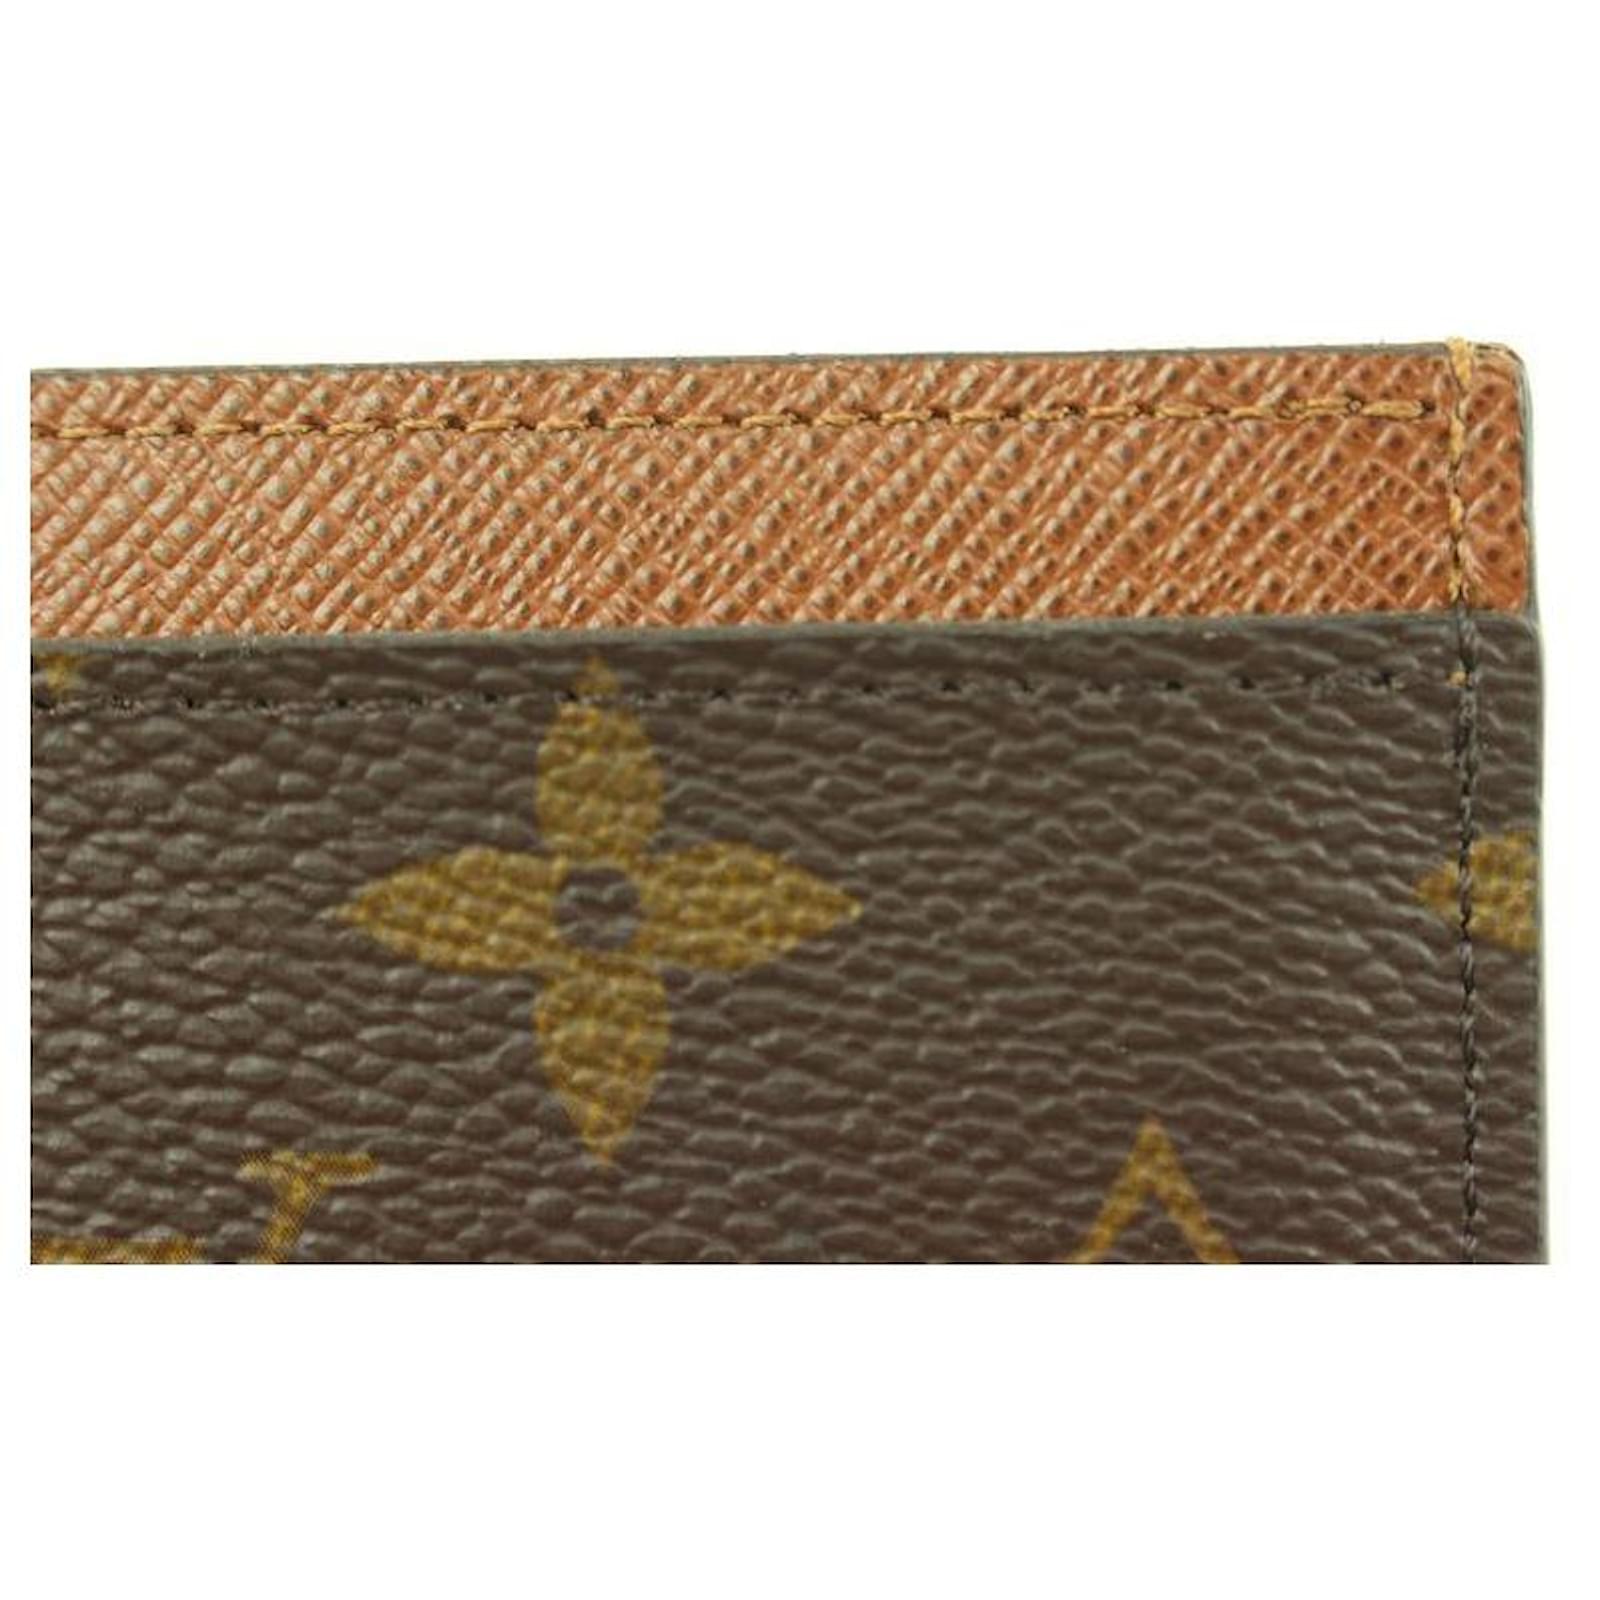 Louis Vuitton Monogram Porte cartes Card Holder Wallet Case 53lk322s